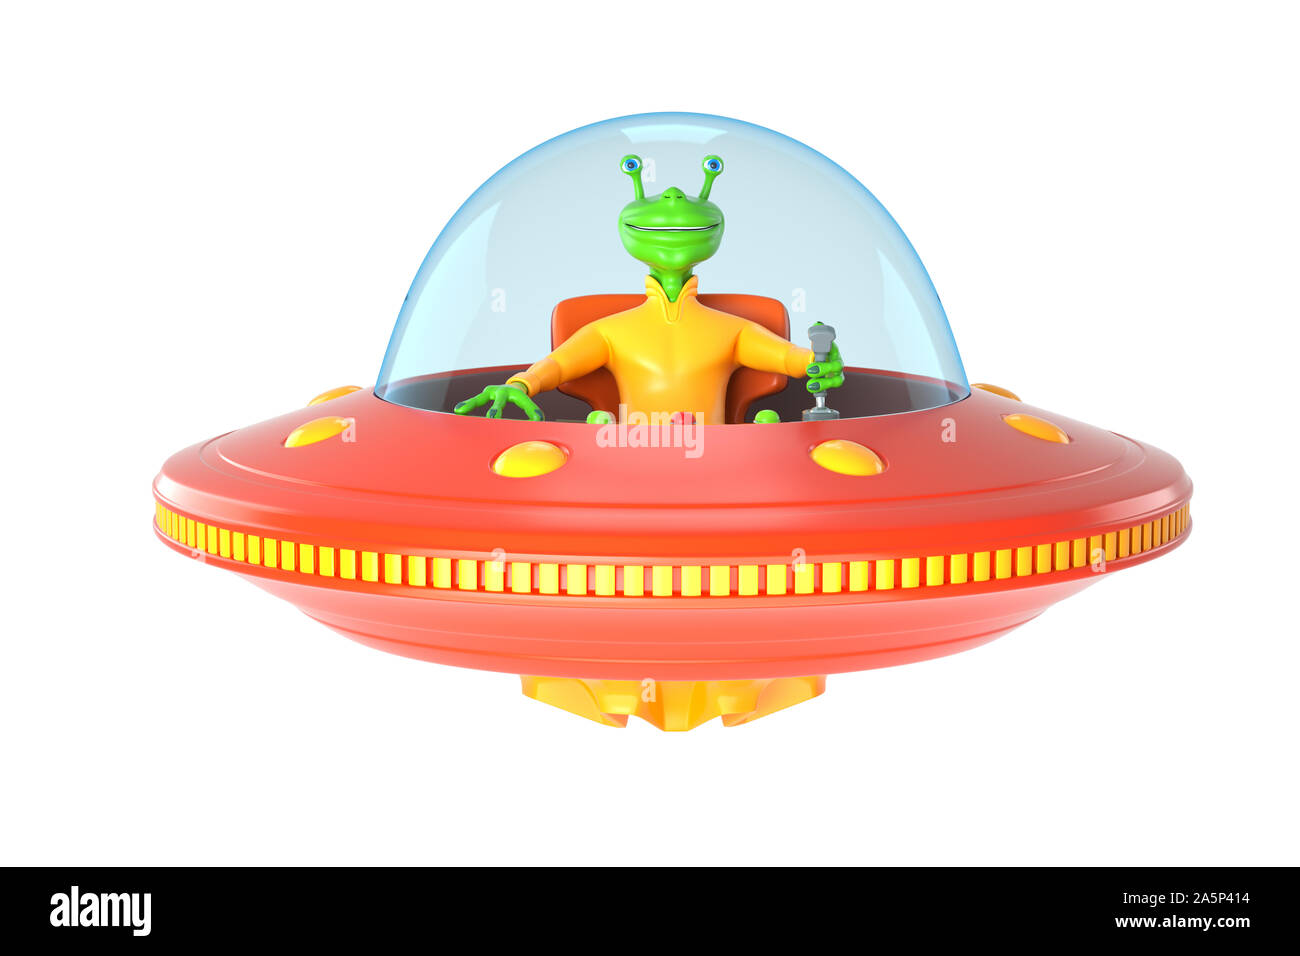 Illustration of UFO with green alien. 3D illustration Stock Photo